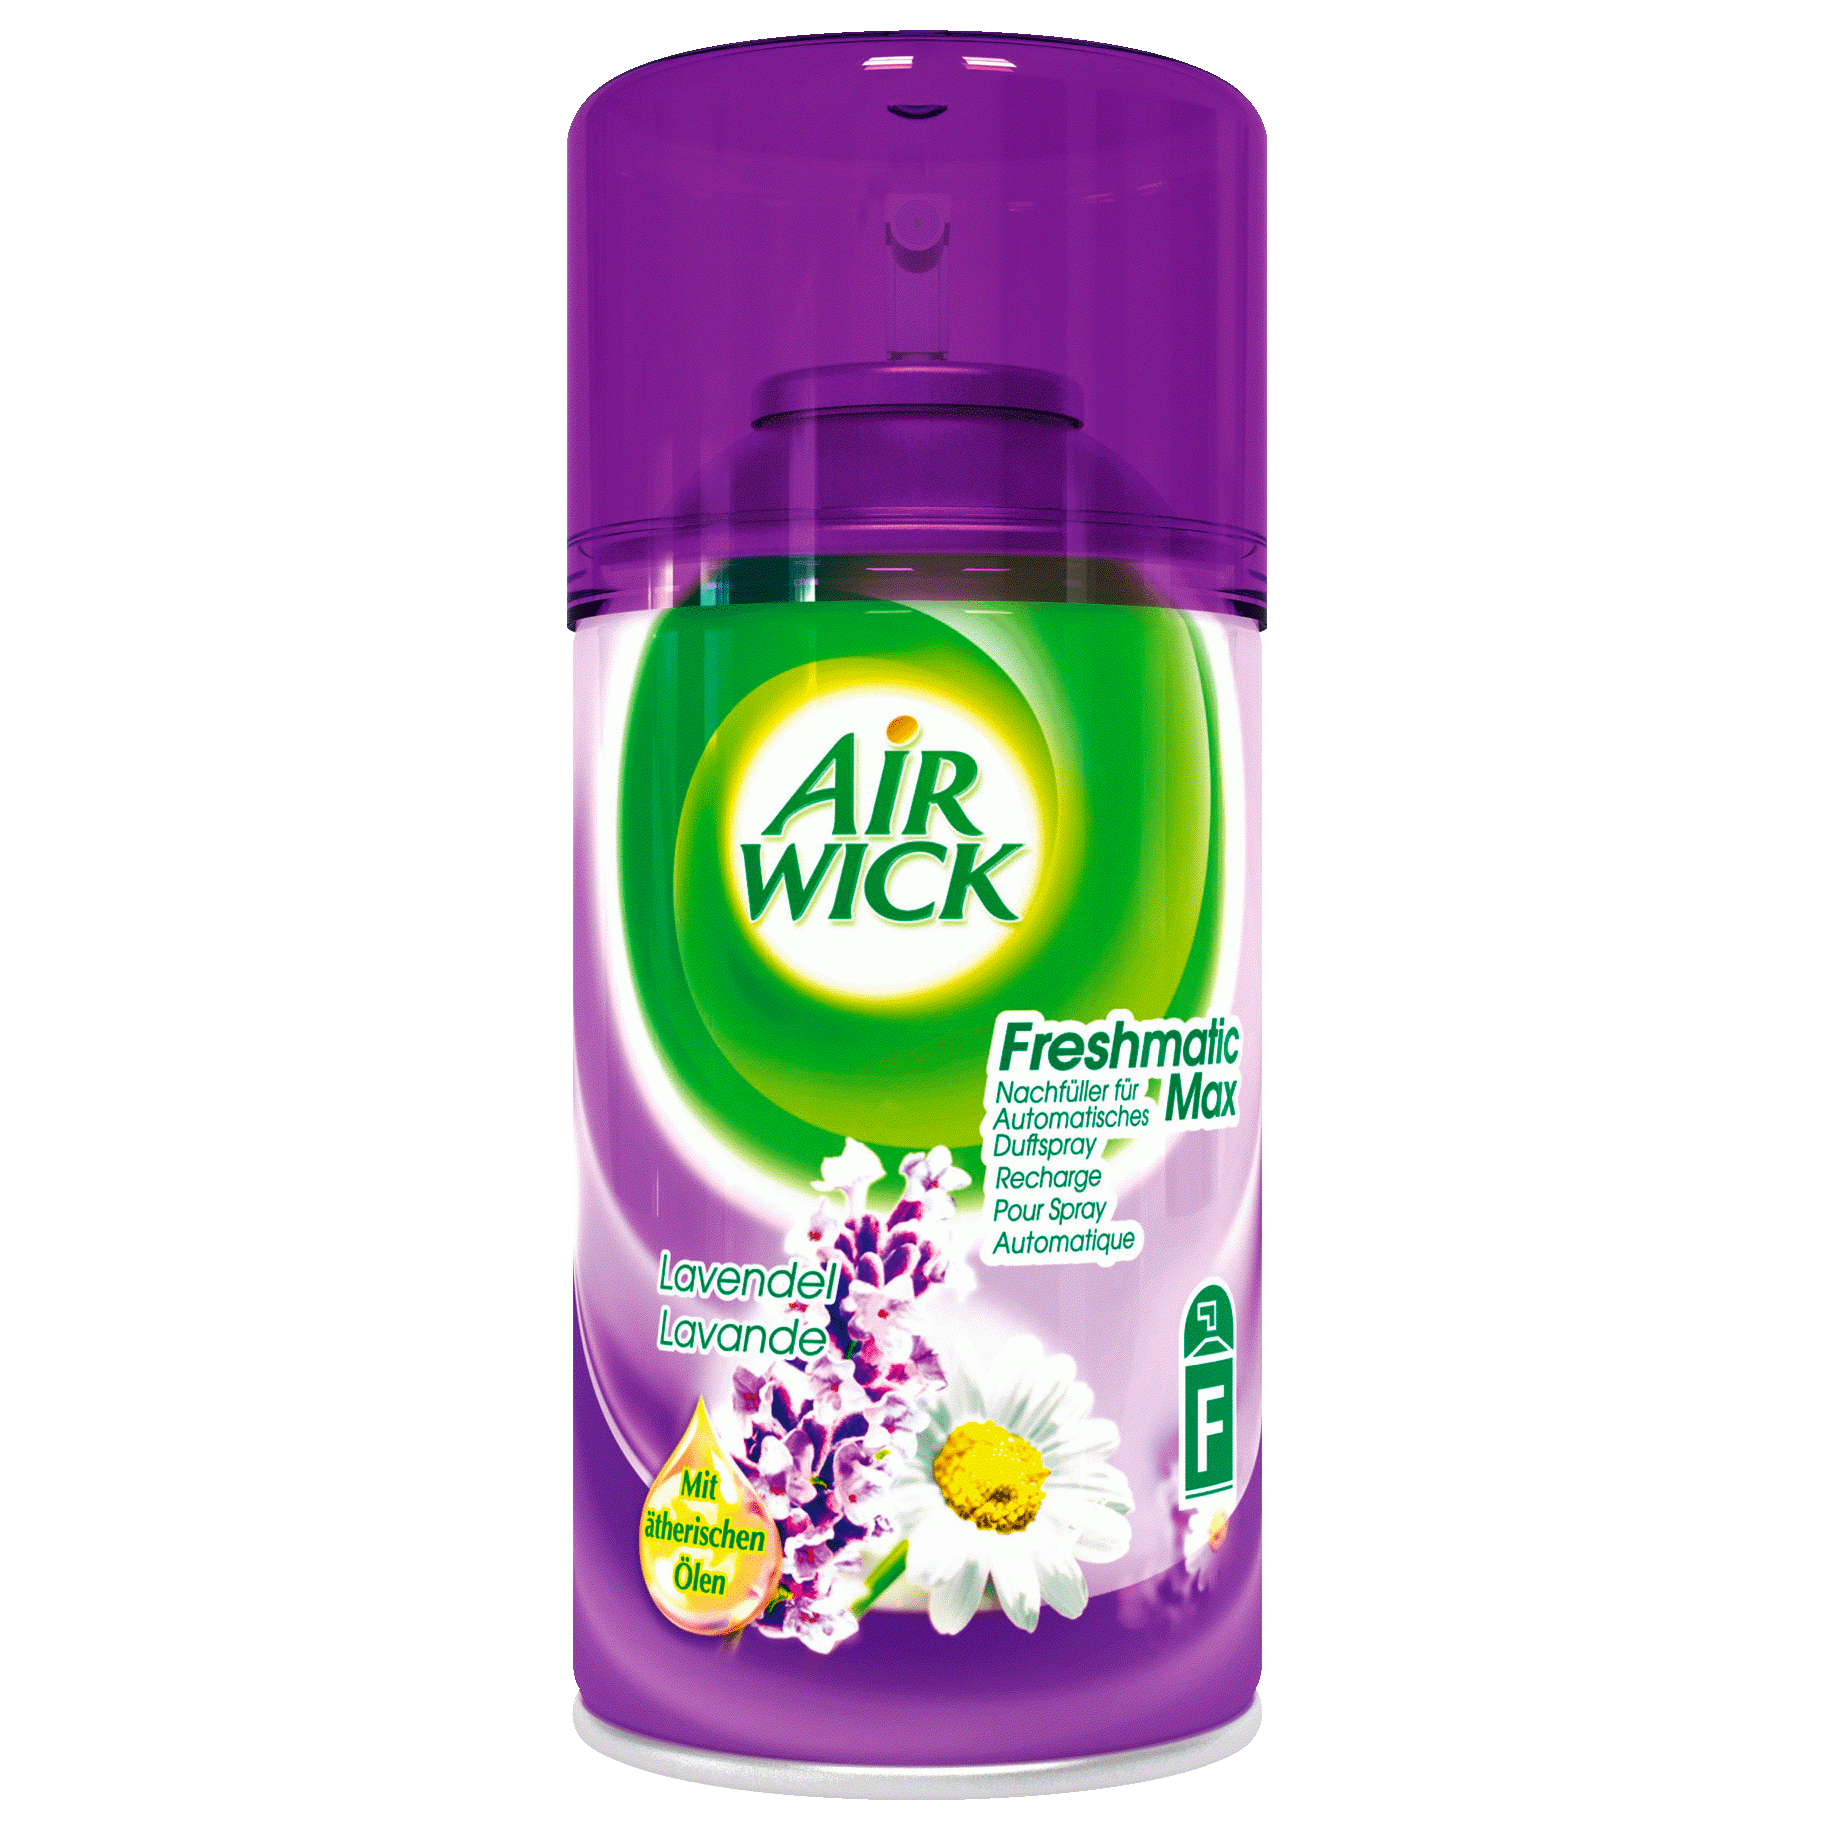 Air Wick Freshmatic Max Lavender 250 ml - £3.99